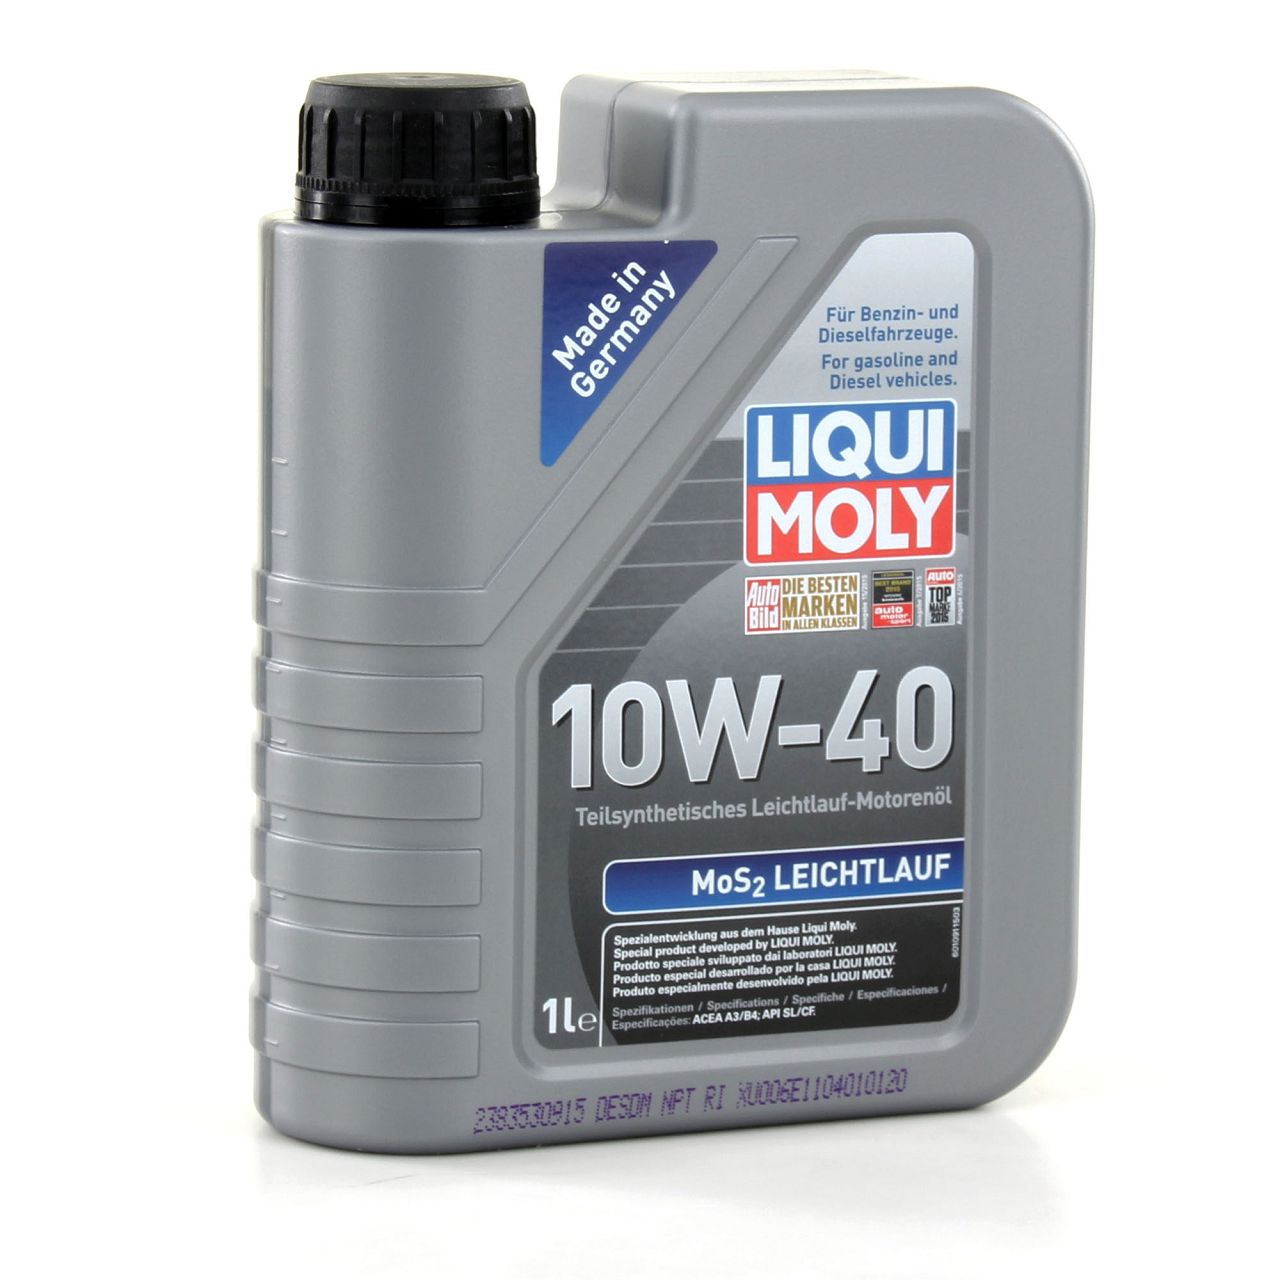 LIQUI MOLY Motoröl Öl MoS2 LEICHTLAUF 10W40 10W-40 1L 1Liter 1091